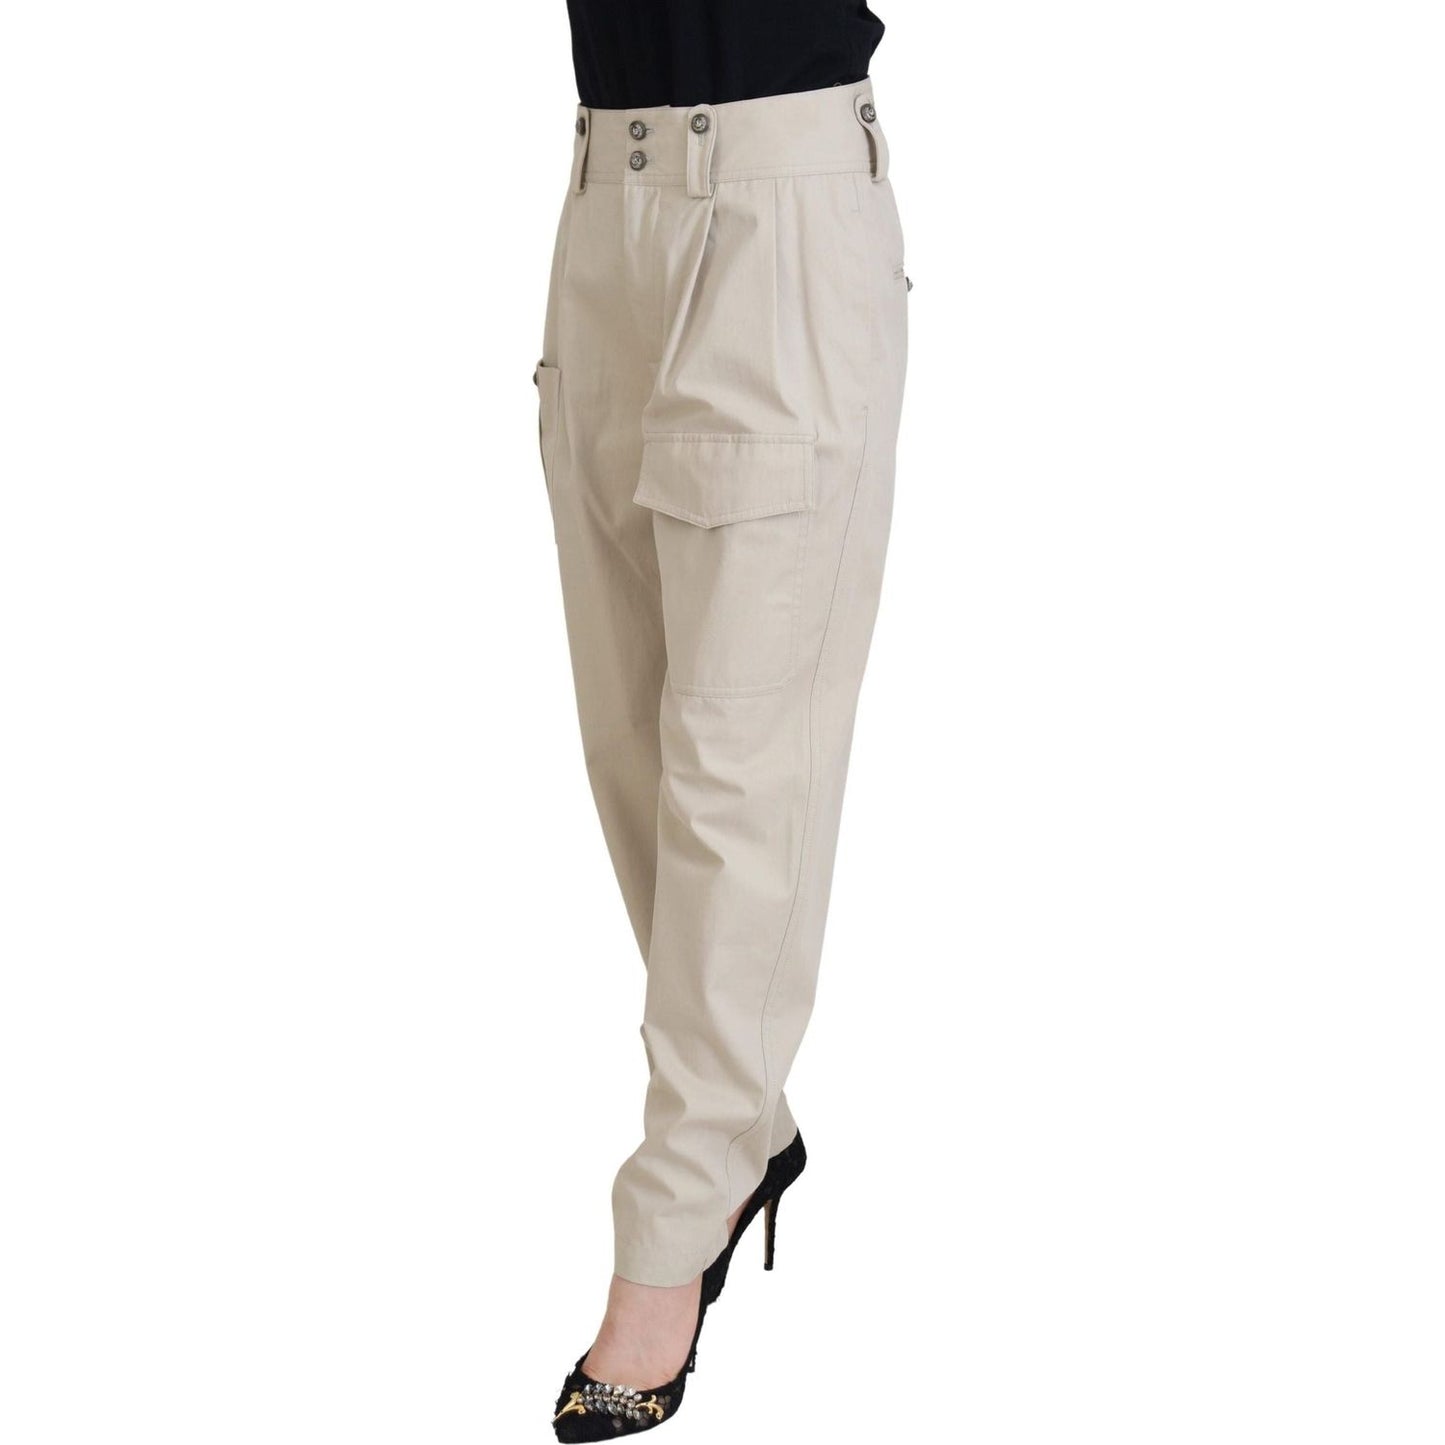 Dolce & Gabbana Elegant Beige Cotton Trousers beige-cotton-women-cargo-pants Jeans & Pants IMG_3291-scaled-76c10d4b-60a.jpg